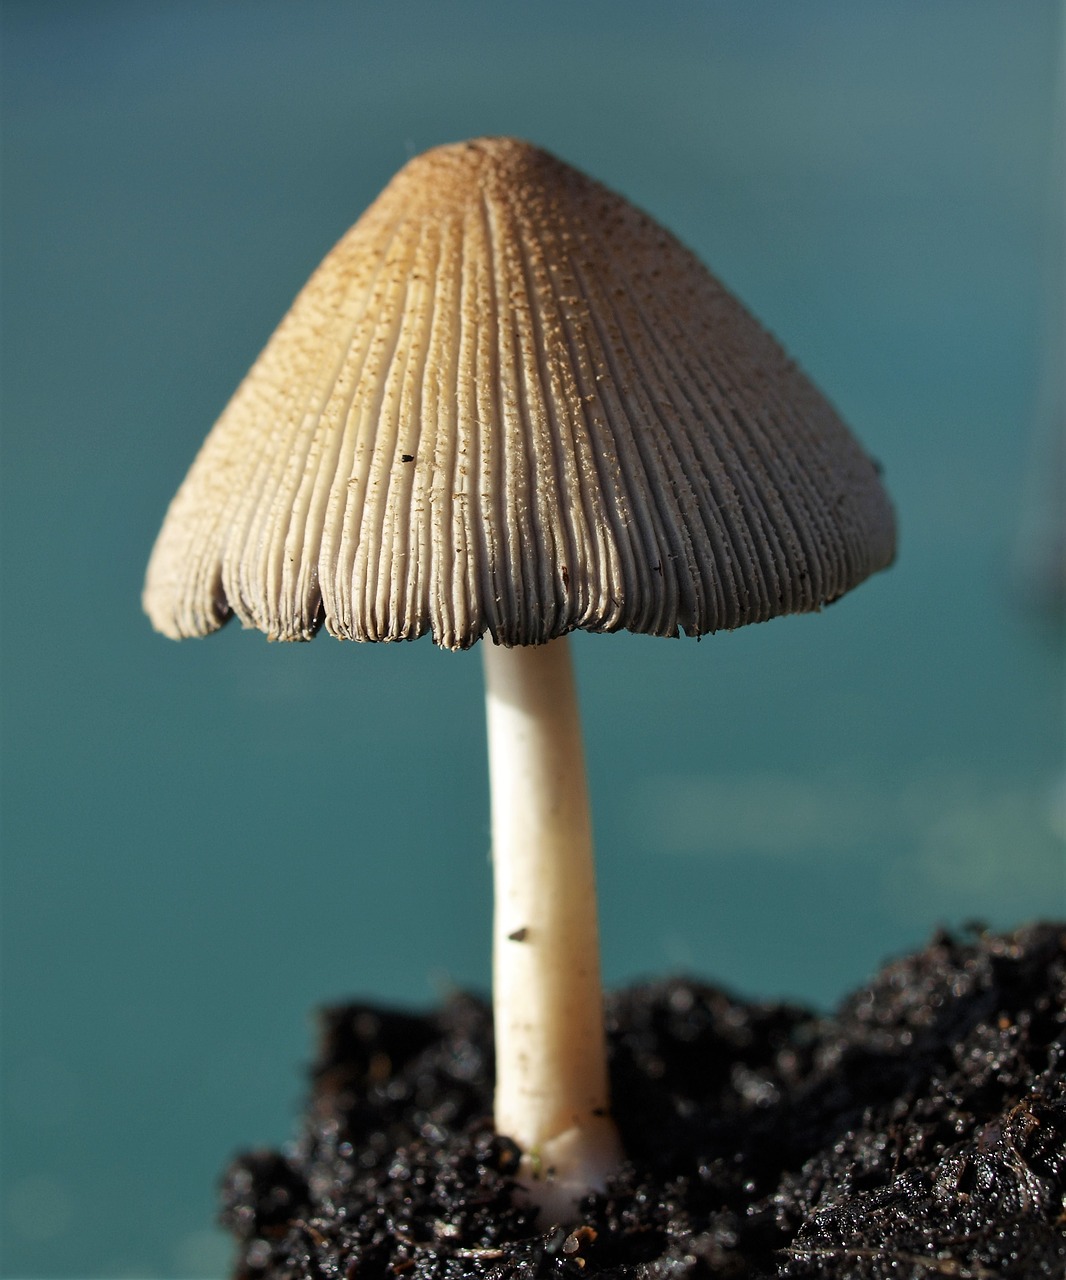 fungi toadstool nature free photo